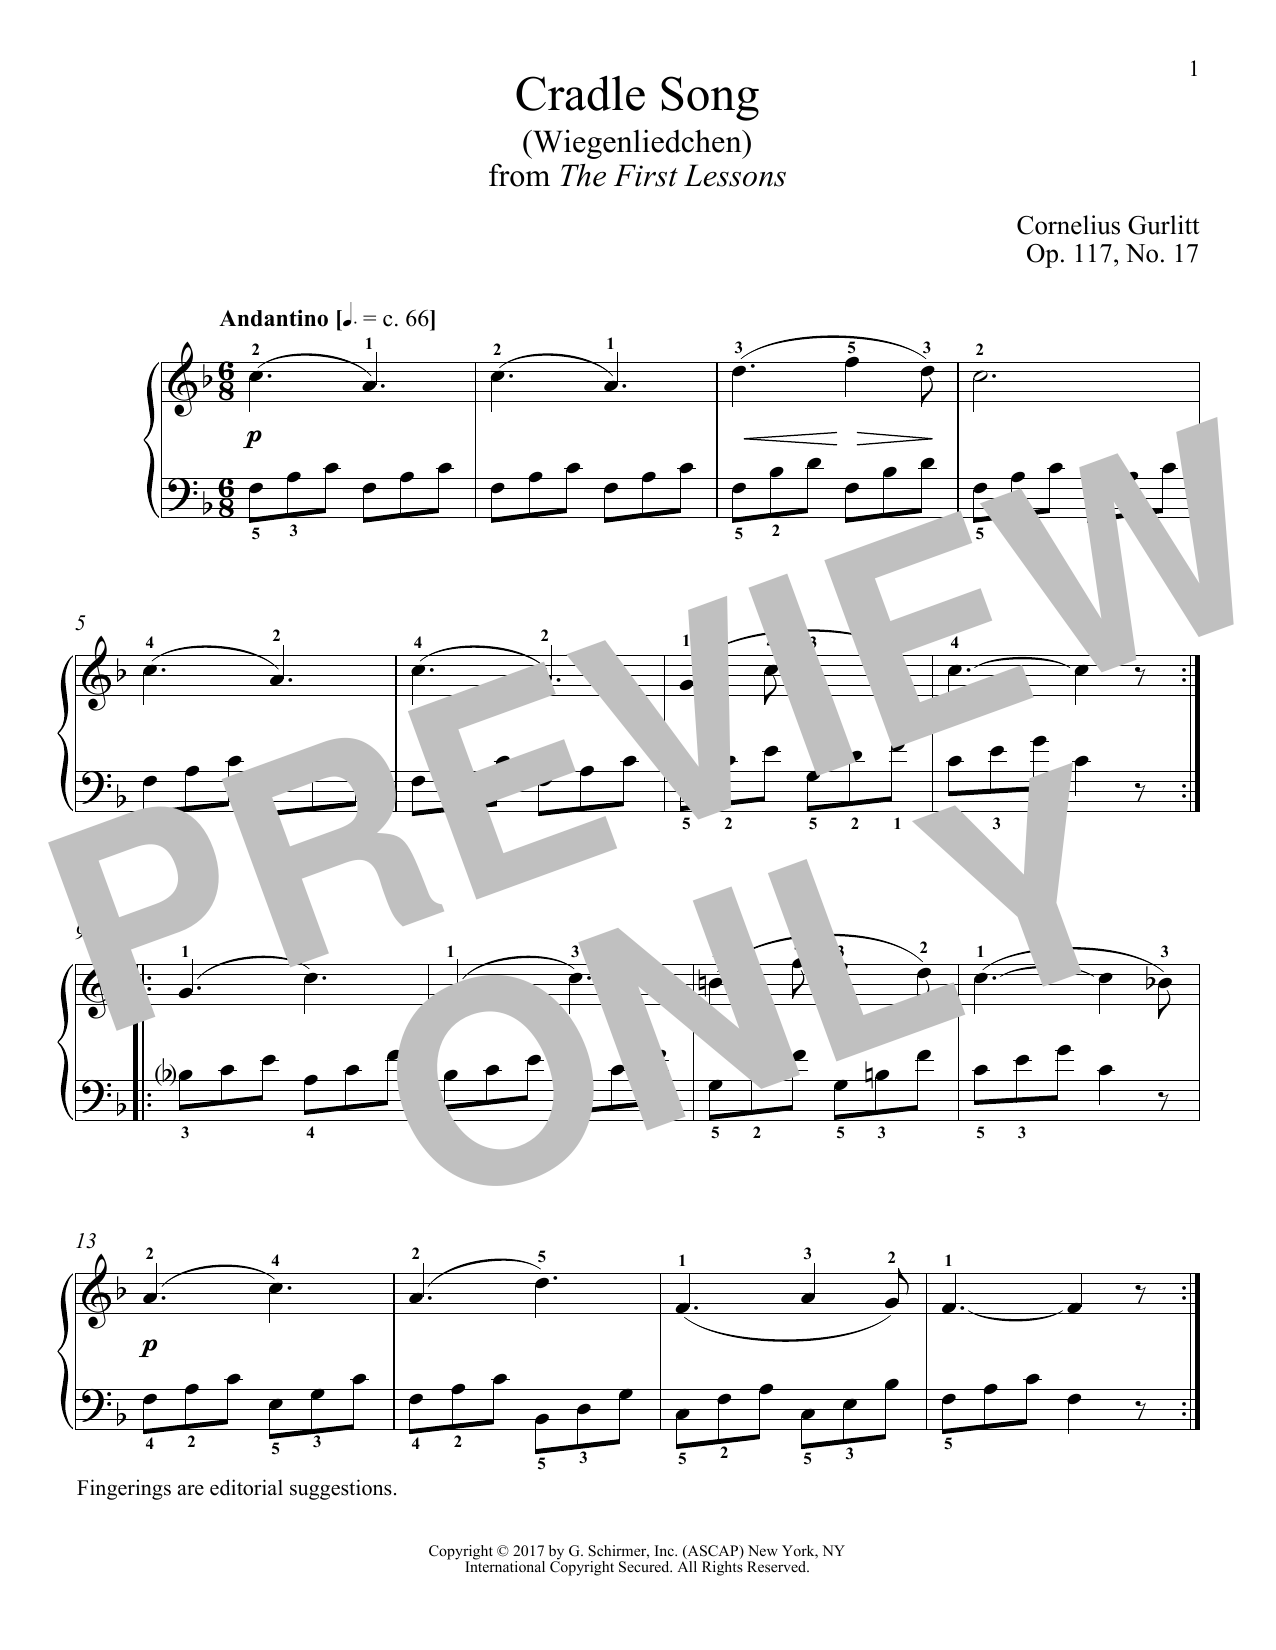 Download Cornelius Gurlitt Cradle Song (Wiegenliedchen), Op. 117, No. 17 Sheet Music and learn how to play Piano PDF digital score in minutes